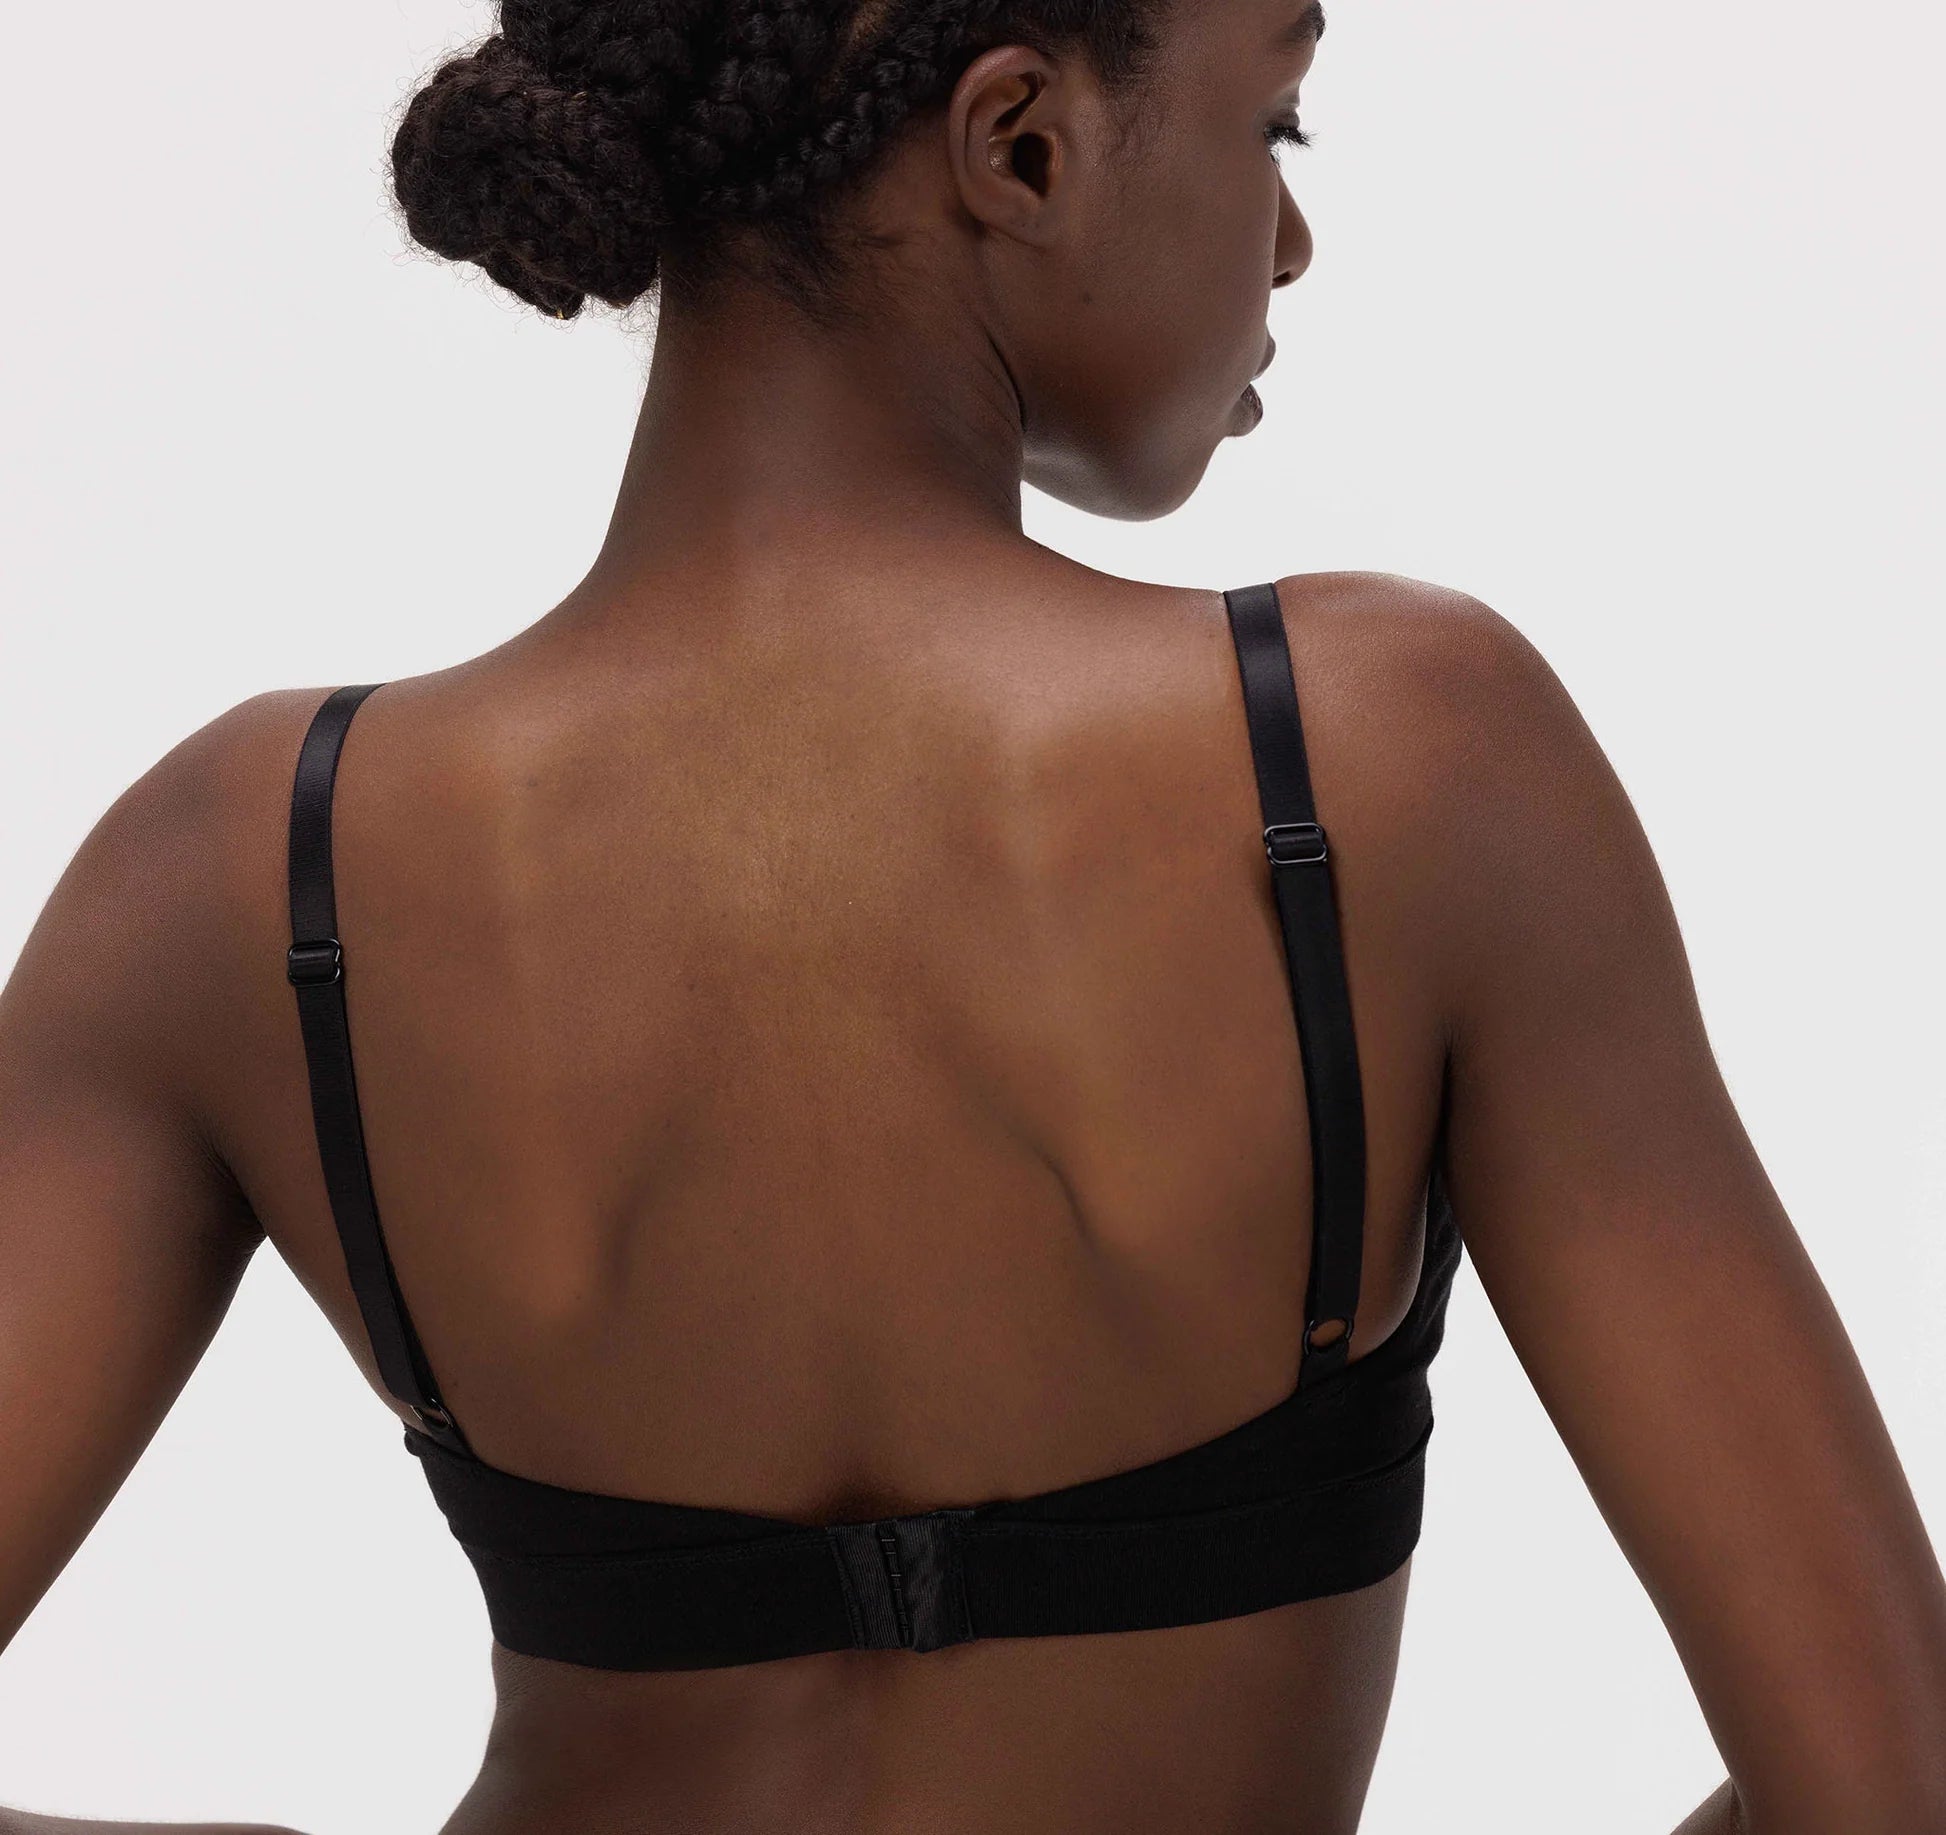 The back view of a woman wearing an Organic Basics Core Triangle Bra - Black.